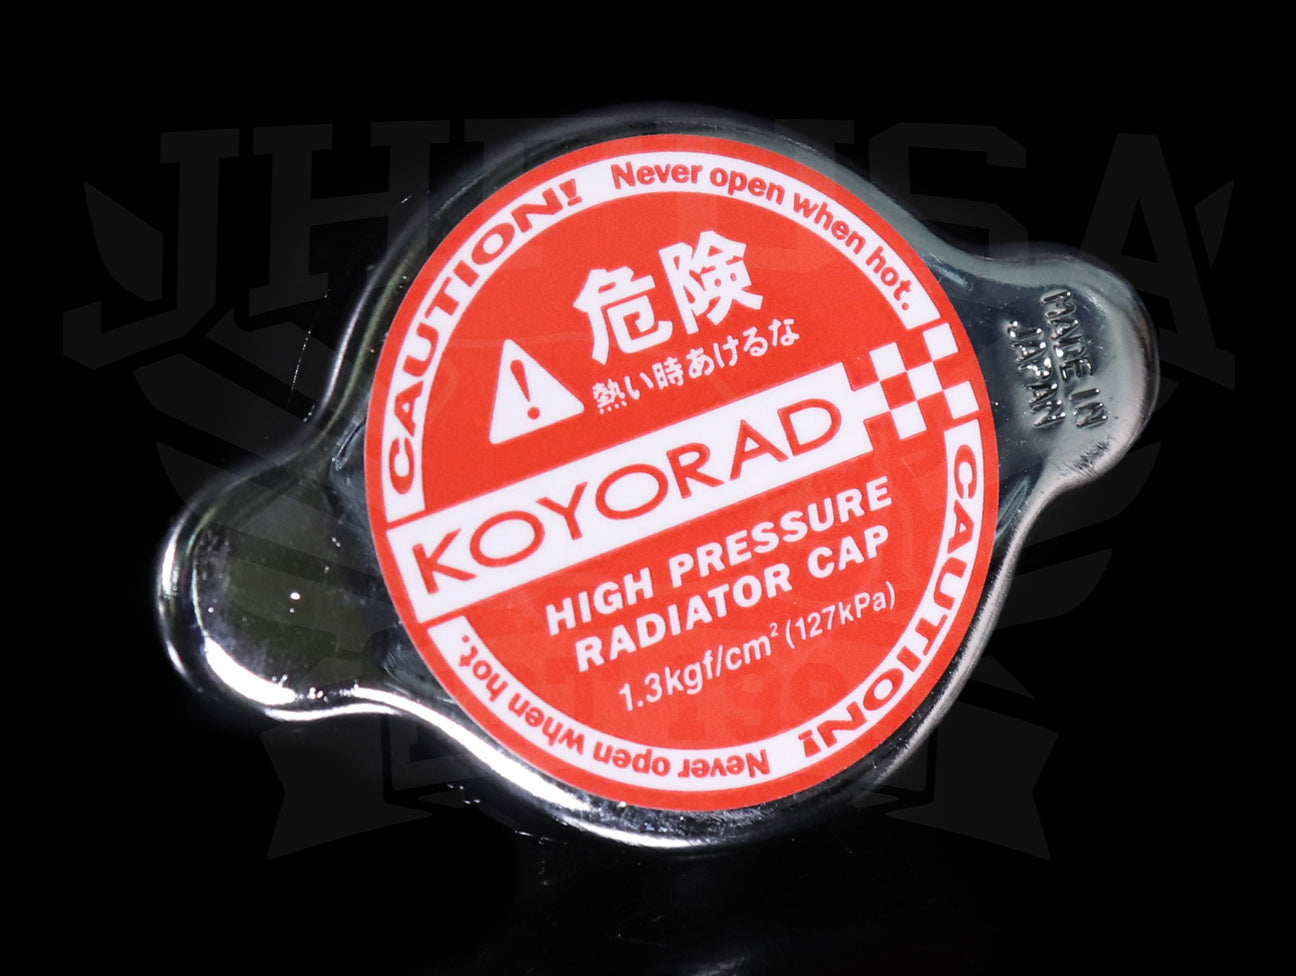 Koyo Type A 1.3 Bar 18.85 PSI High Pressure Radiator Cap